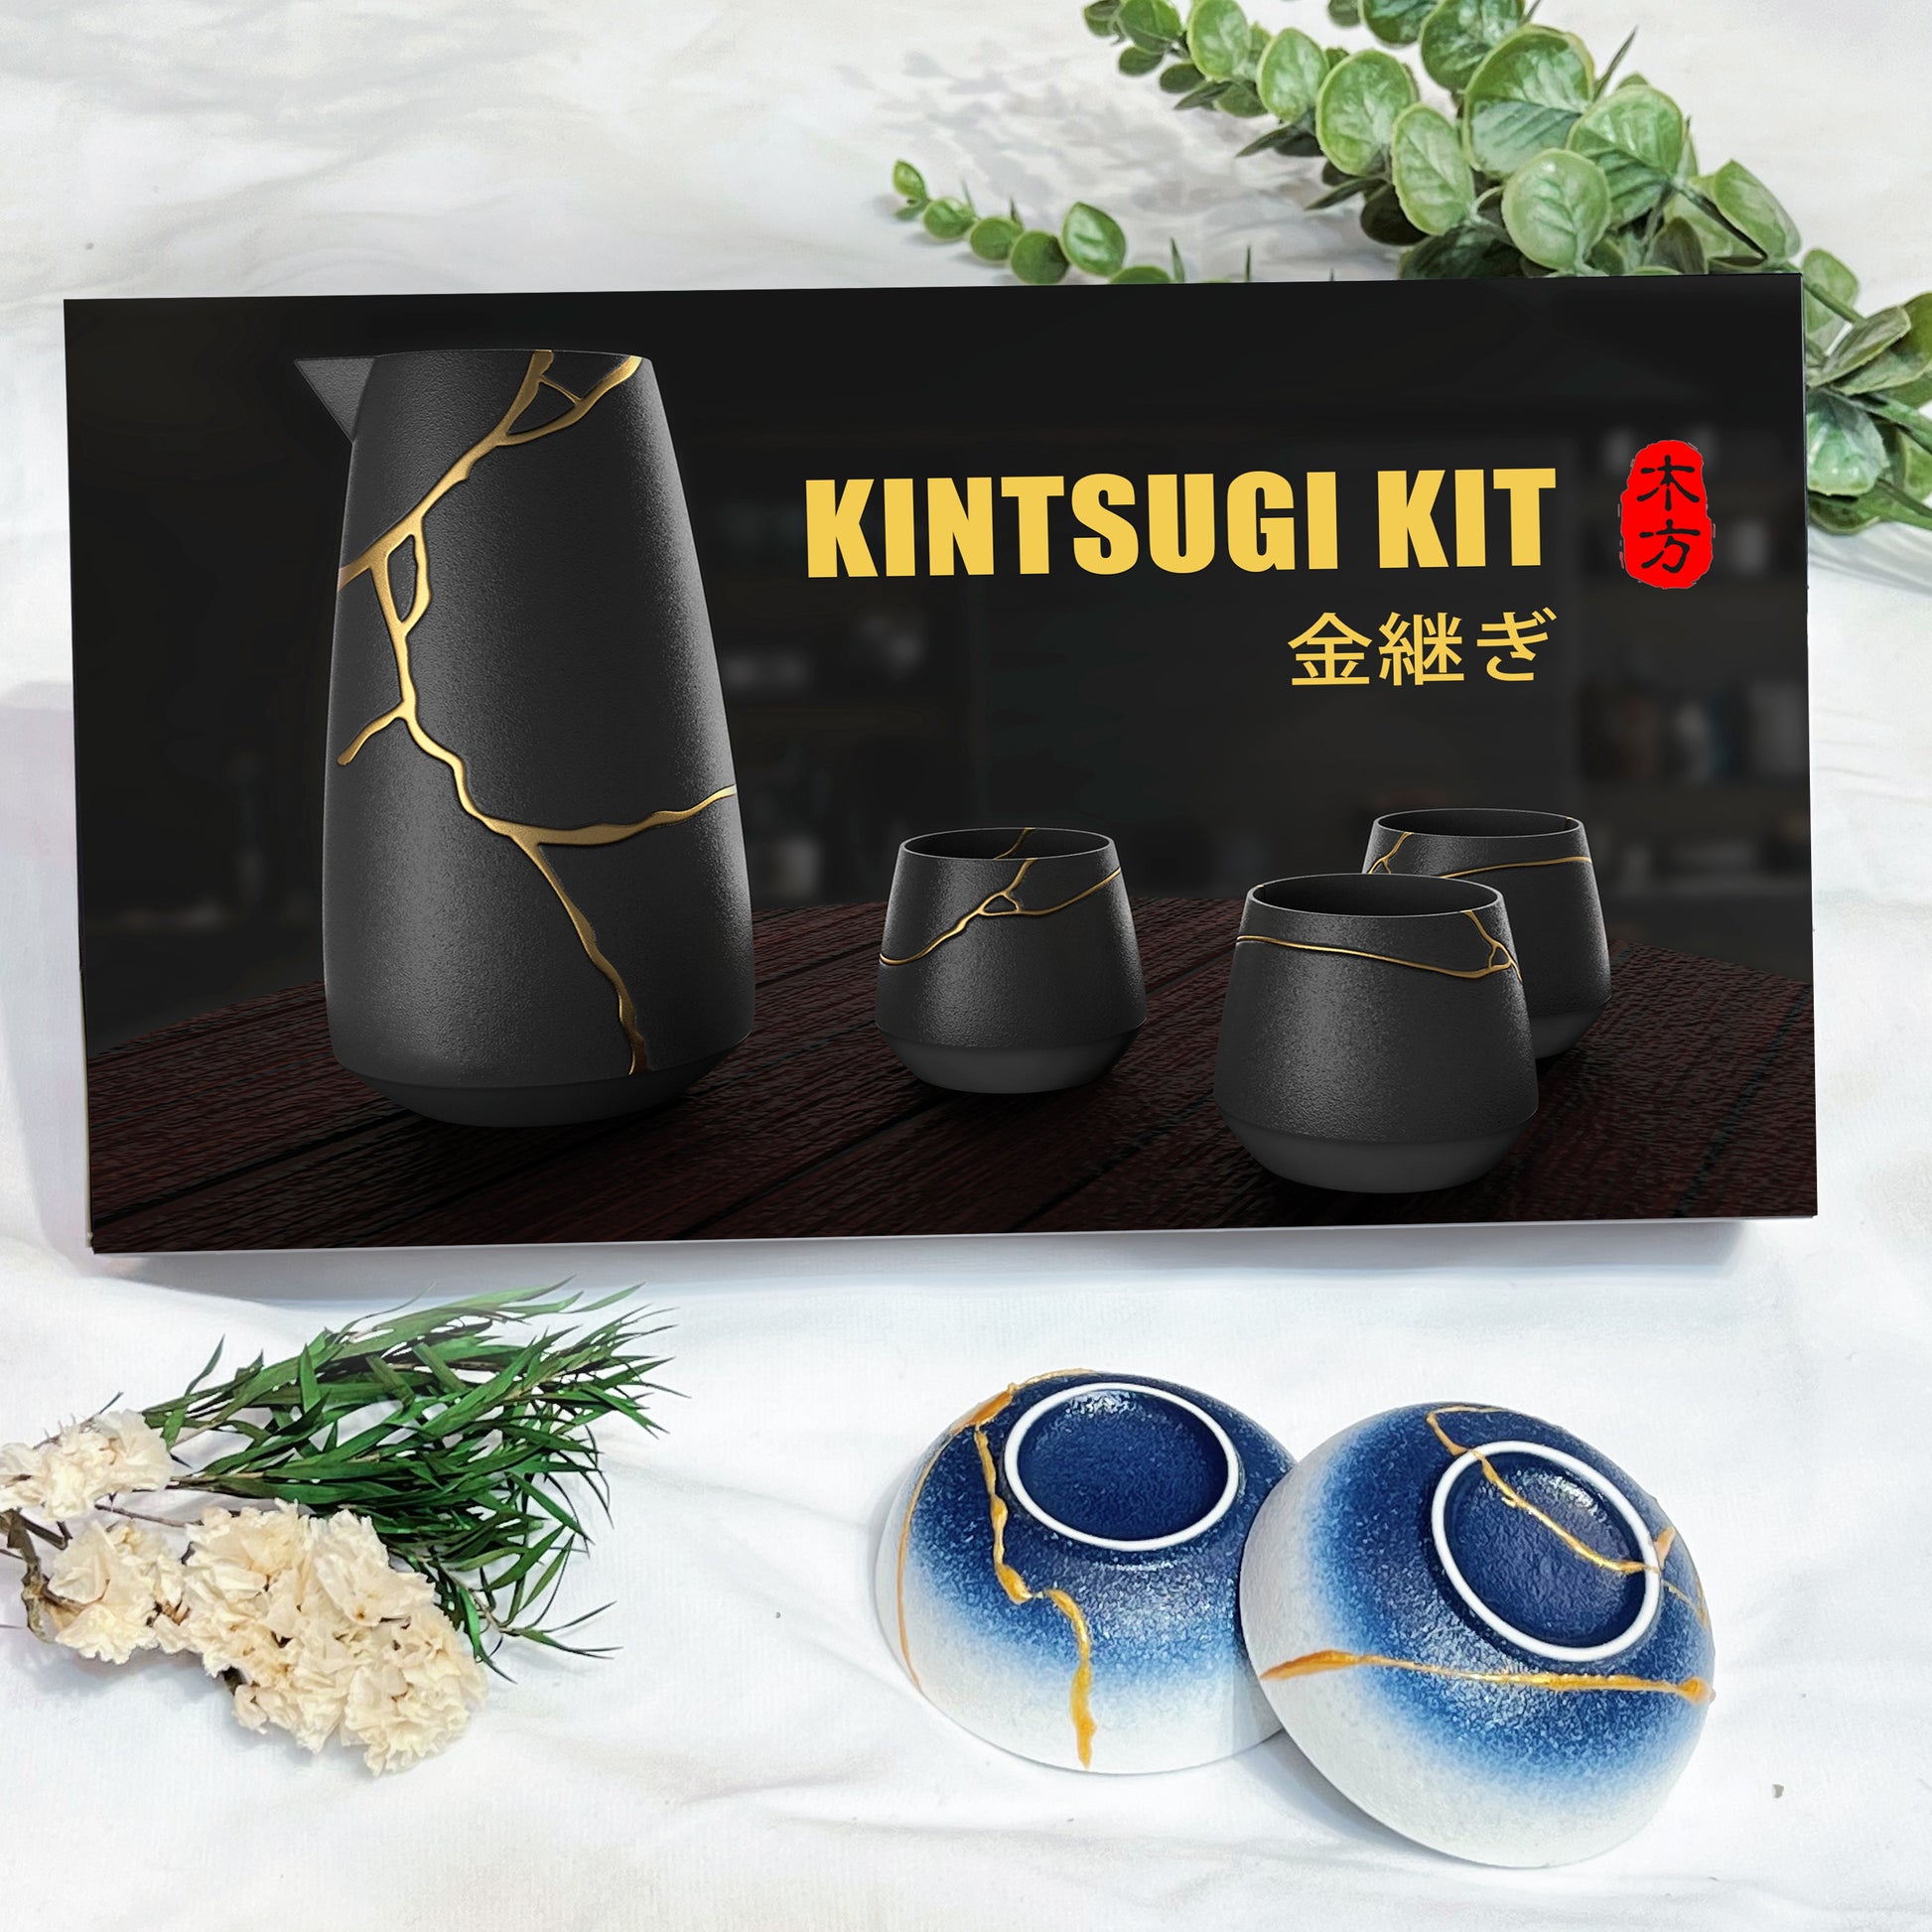 MUFUN Kintsugi Repair Kit Repair Your Meaningful Pottery with Gold